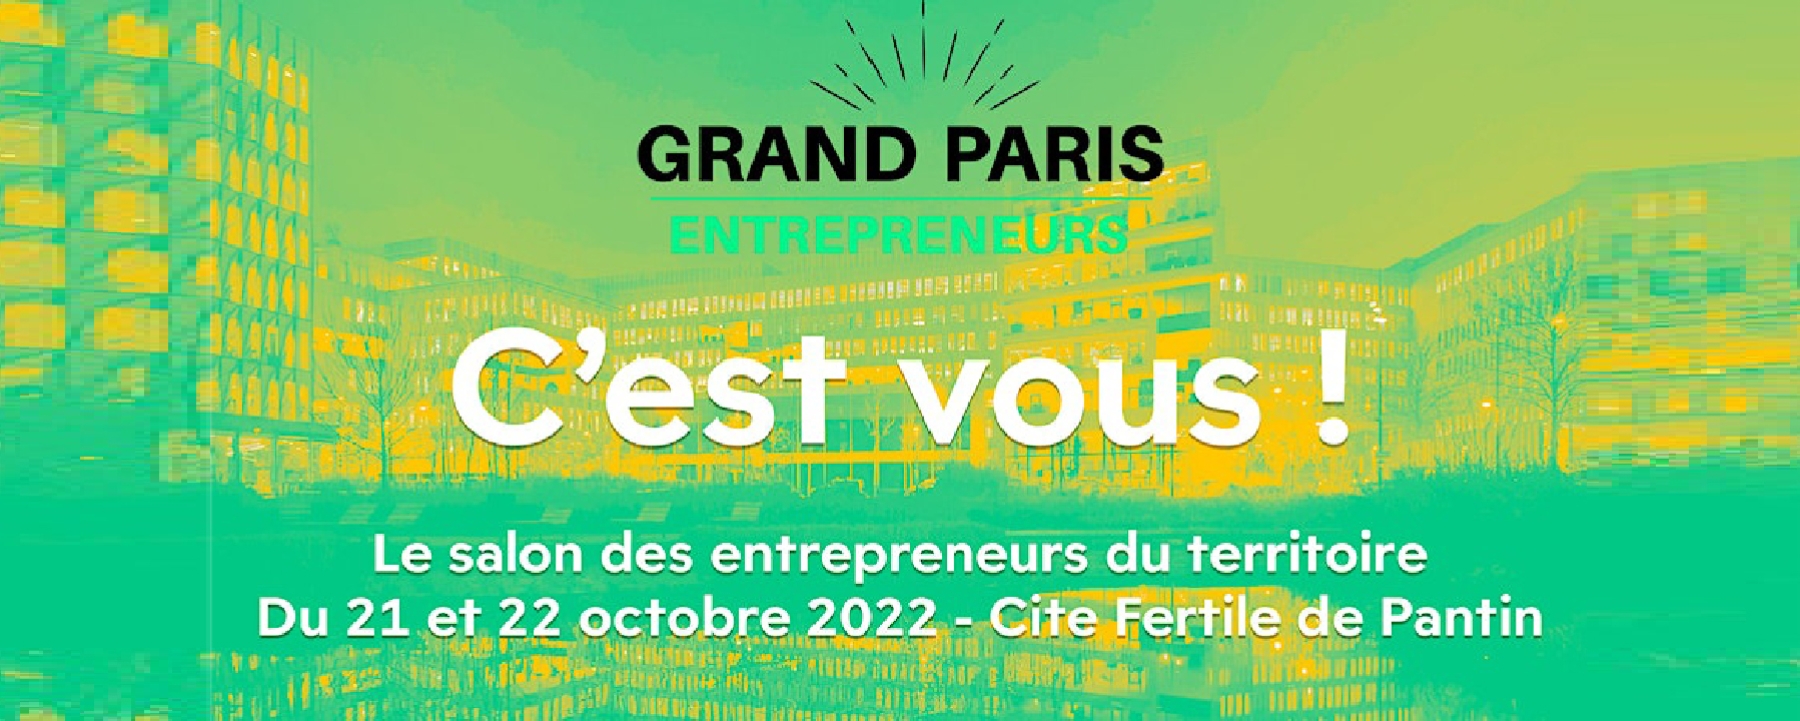 Grand Paris Entrepreneurs